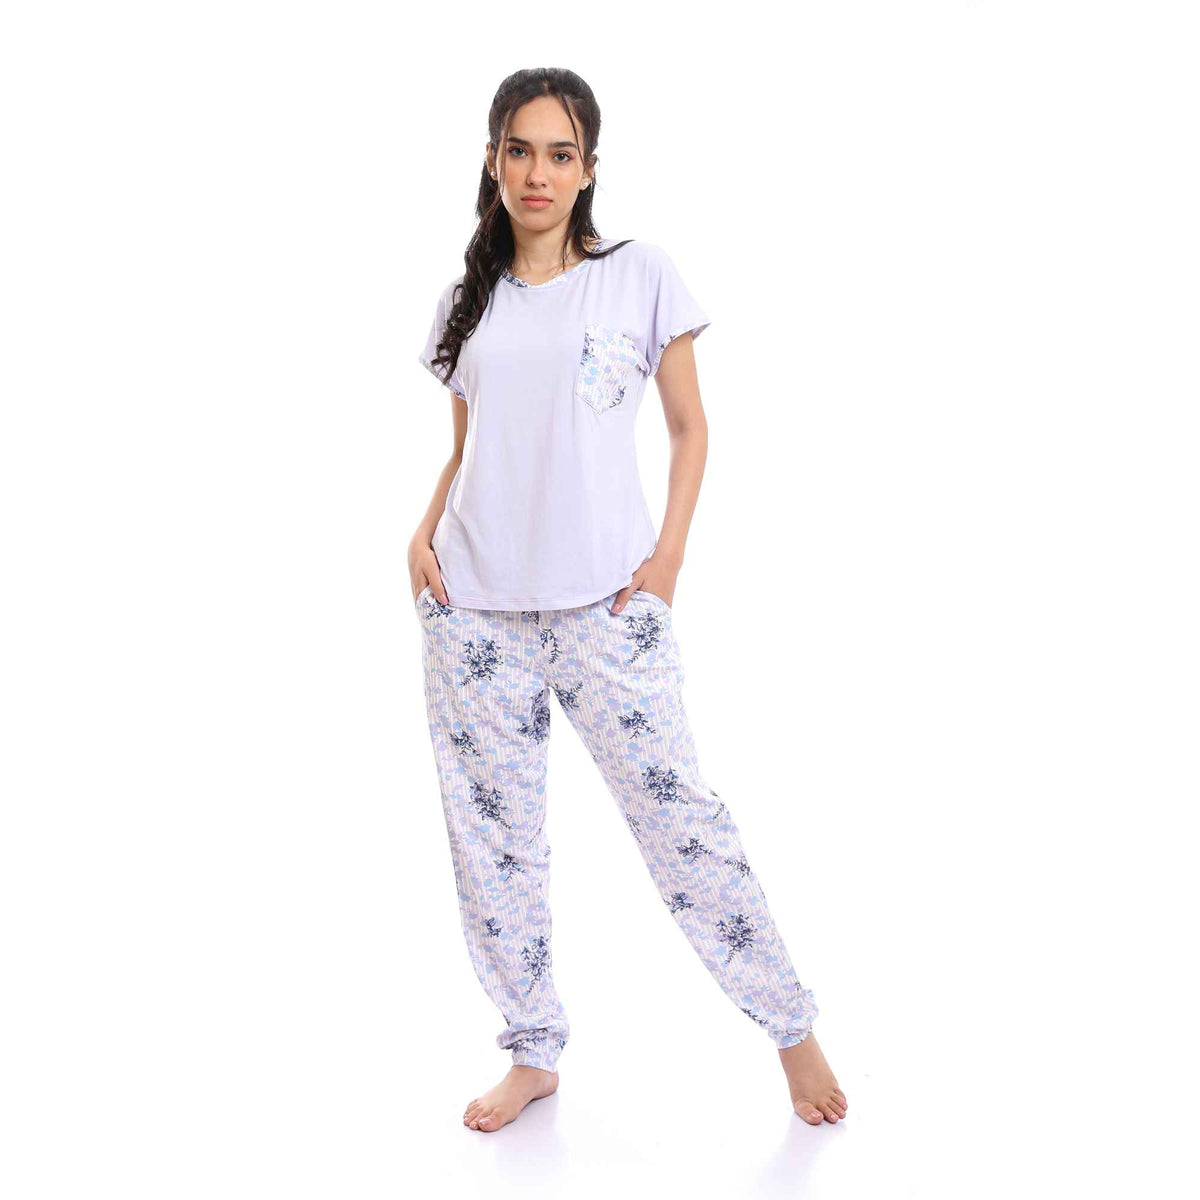 Short Sleeves Tee & Patterned Pants Pajama Set - Light Purple & Baby Blue